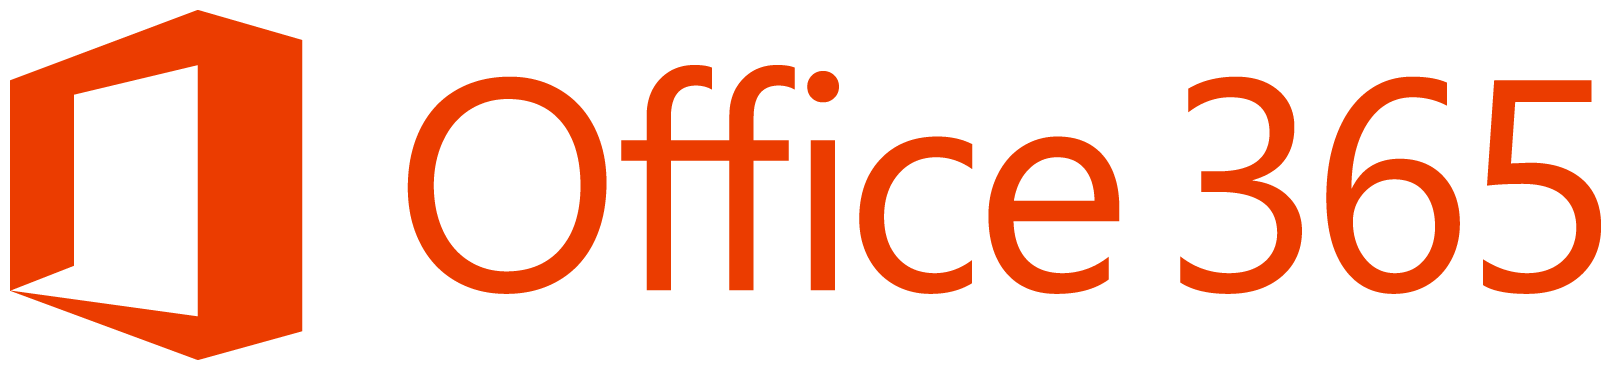 MICROSOFT OFFICE 365 users